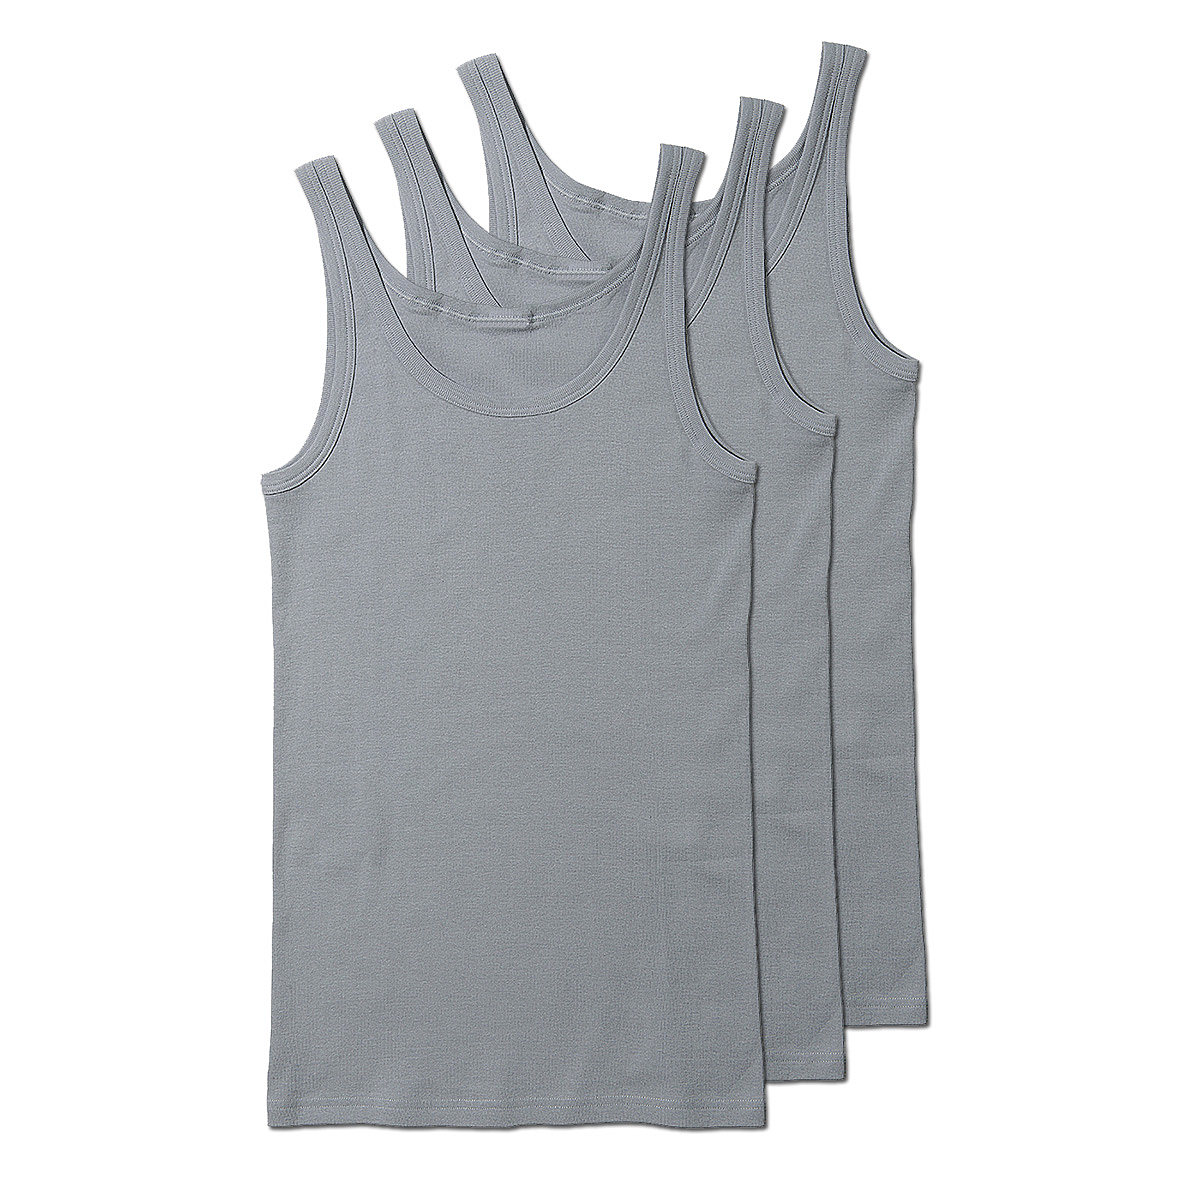 Feinripp Pack Im Größenspezialist | Unterhemd | | Männermode hellgrau Farbe günstigen 3er